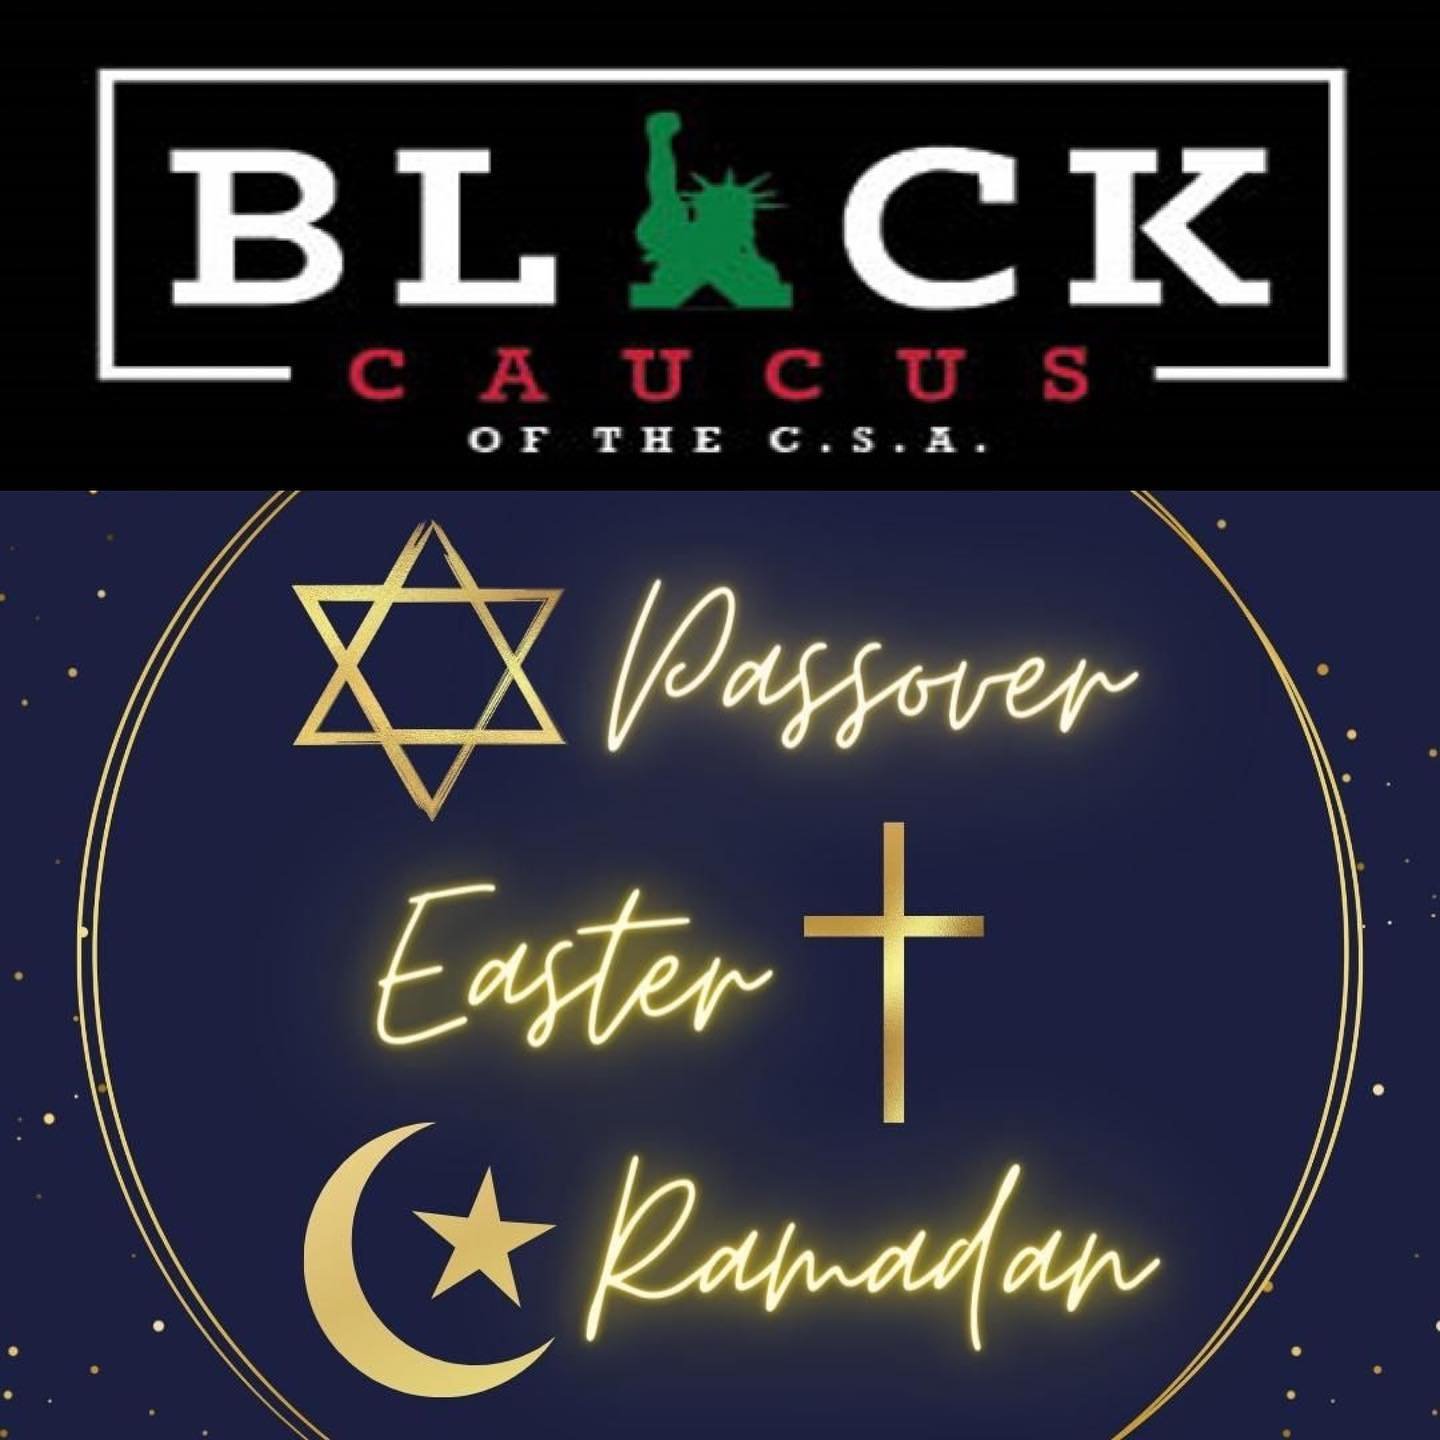 Ramadan Mubarak, Happy Pesach and Happy Resurrection Day!

Have a blessed holiday filled with happiness, love, and faith.

@DOEChancellor 
@NYCSchools 
@NYCMayor 
@FollowCSA

#BlackCaucusCSA
#CSABlackCaucus
#BCCSA
#CSA
#CouncilOfSupervisorsAndAdminis